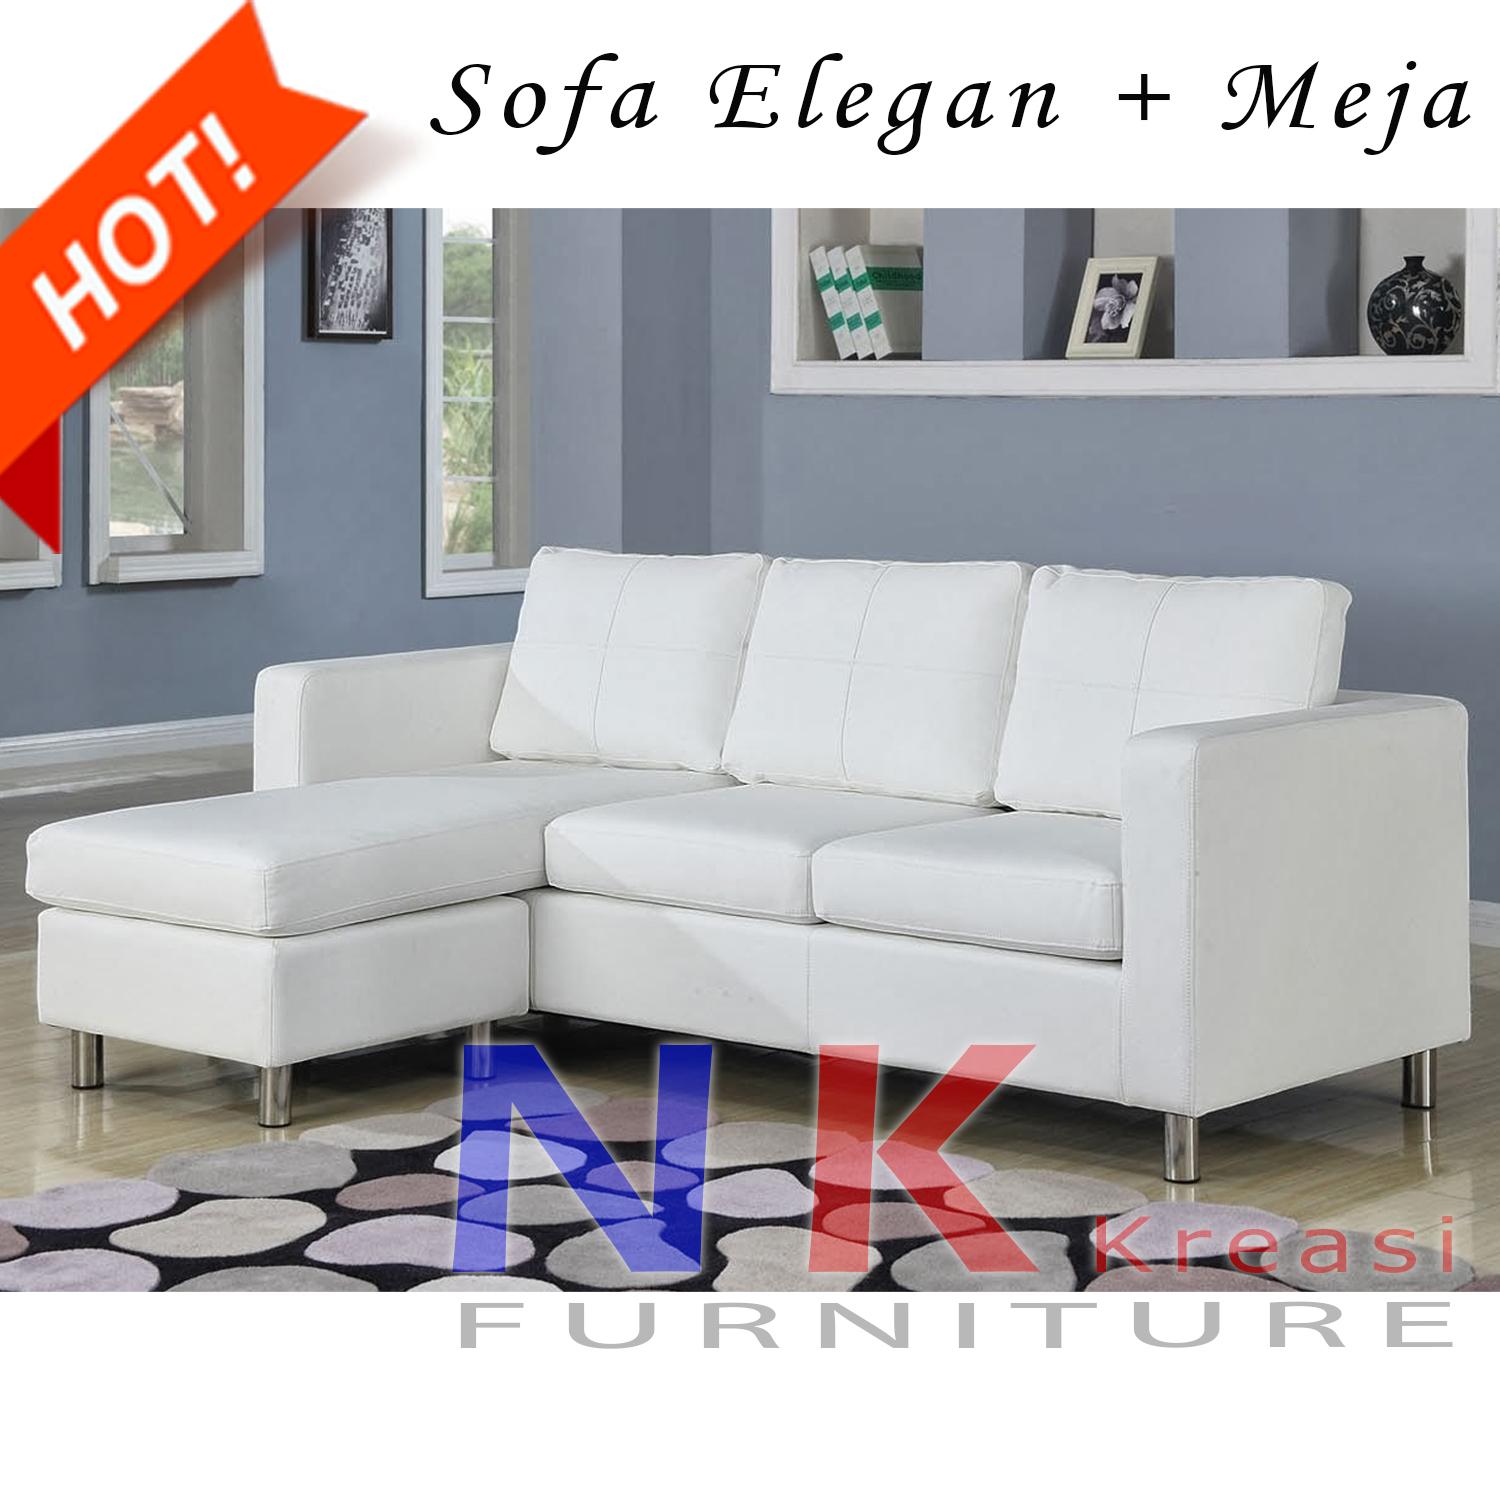 Harga Terbaru Kursi Sofa Minimalis Modern Juni 2018 Lengkap Nuoobco